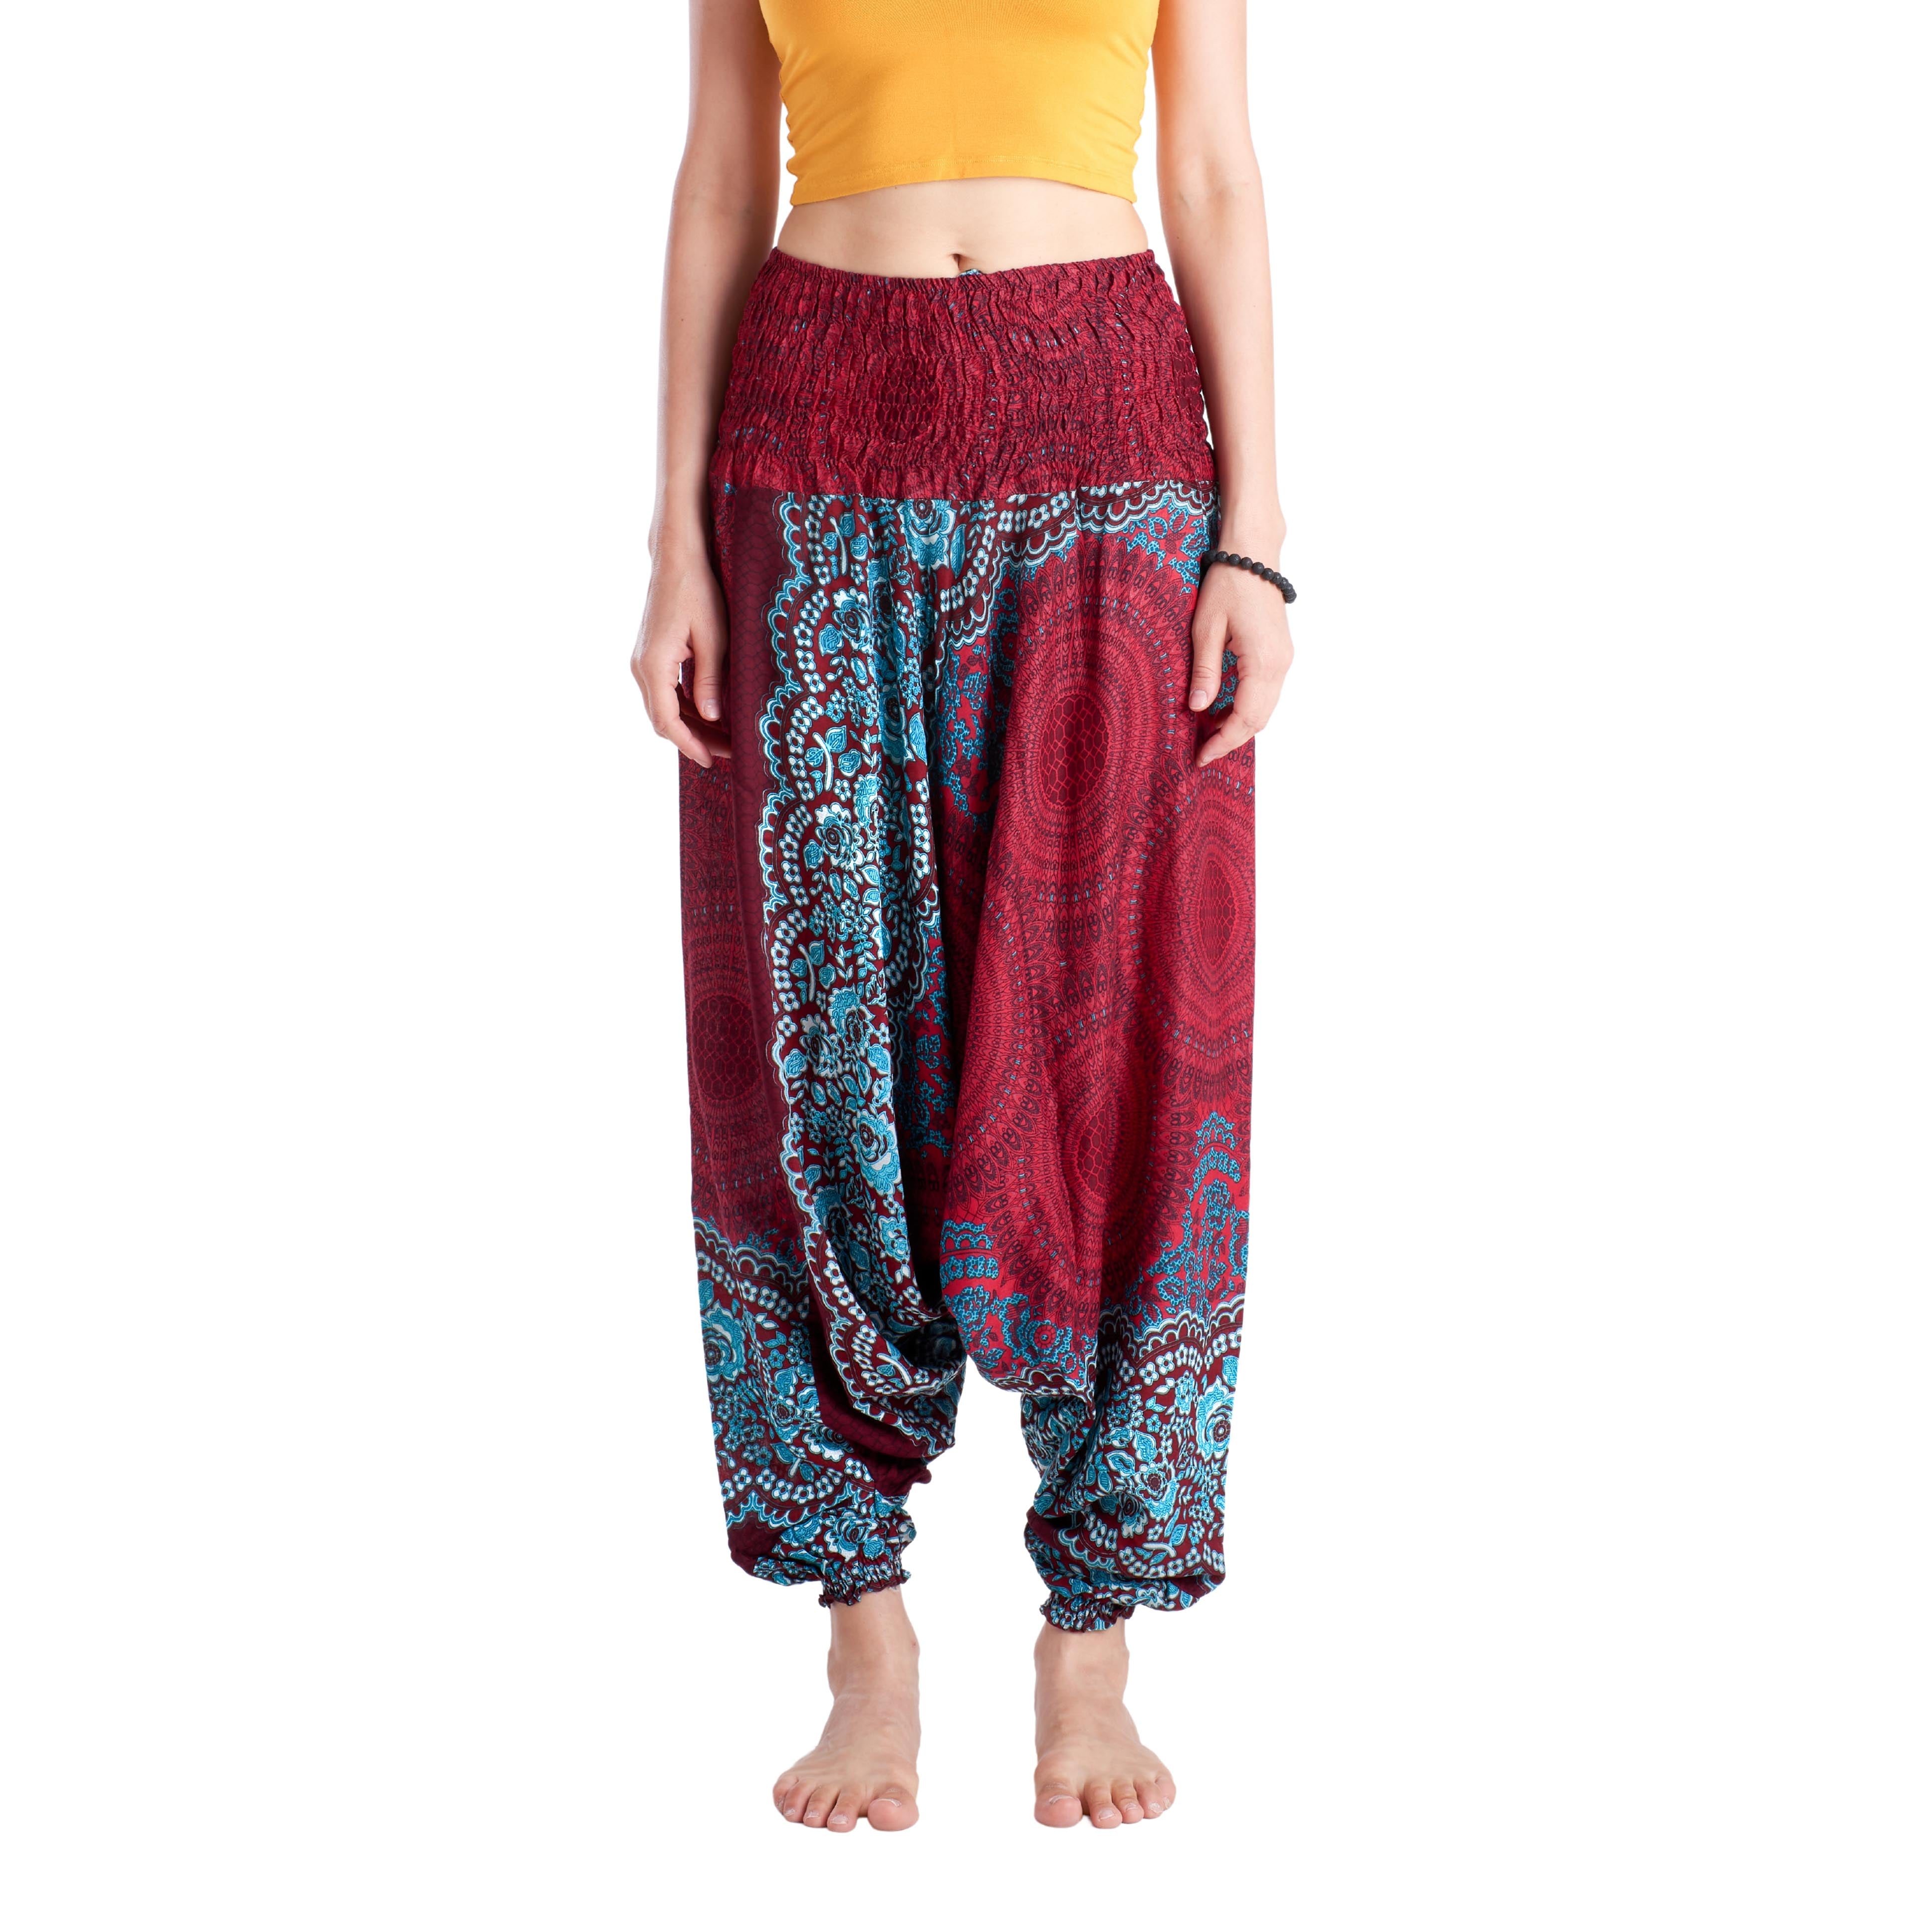 HOFI High Waist Yoga Pants for Women 4 Way Stretch Nepal